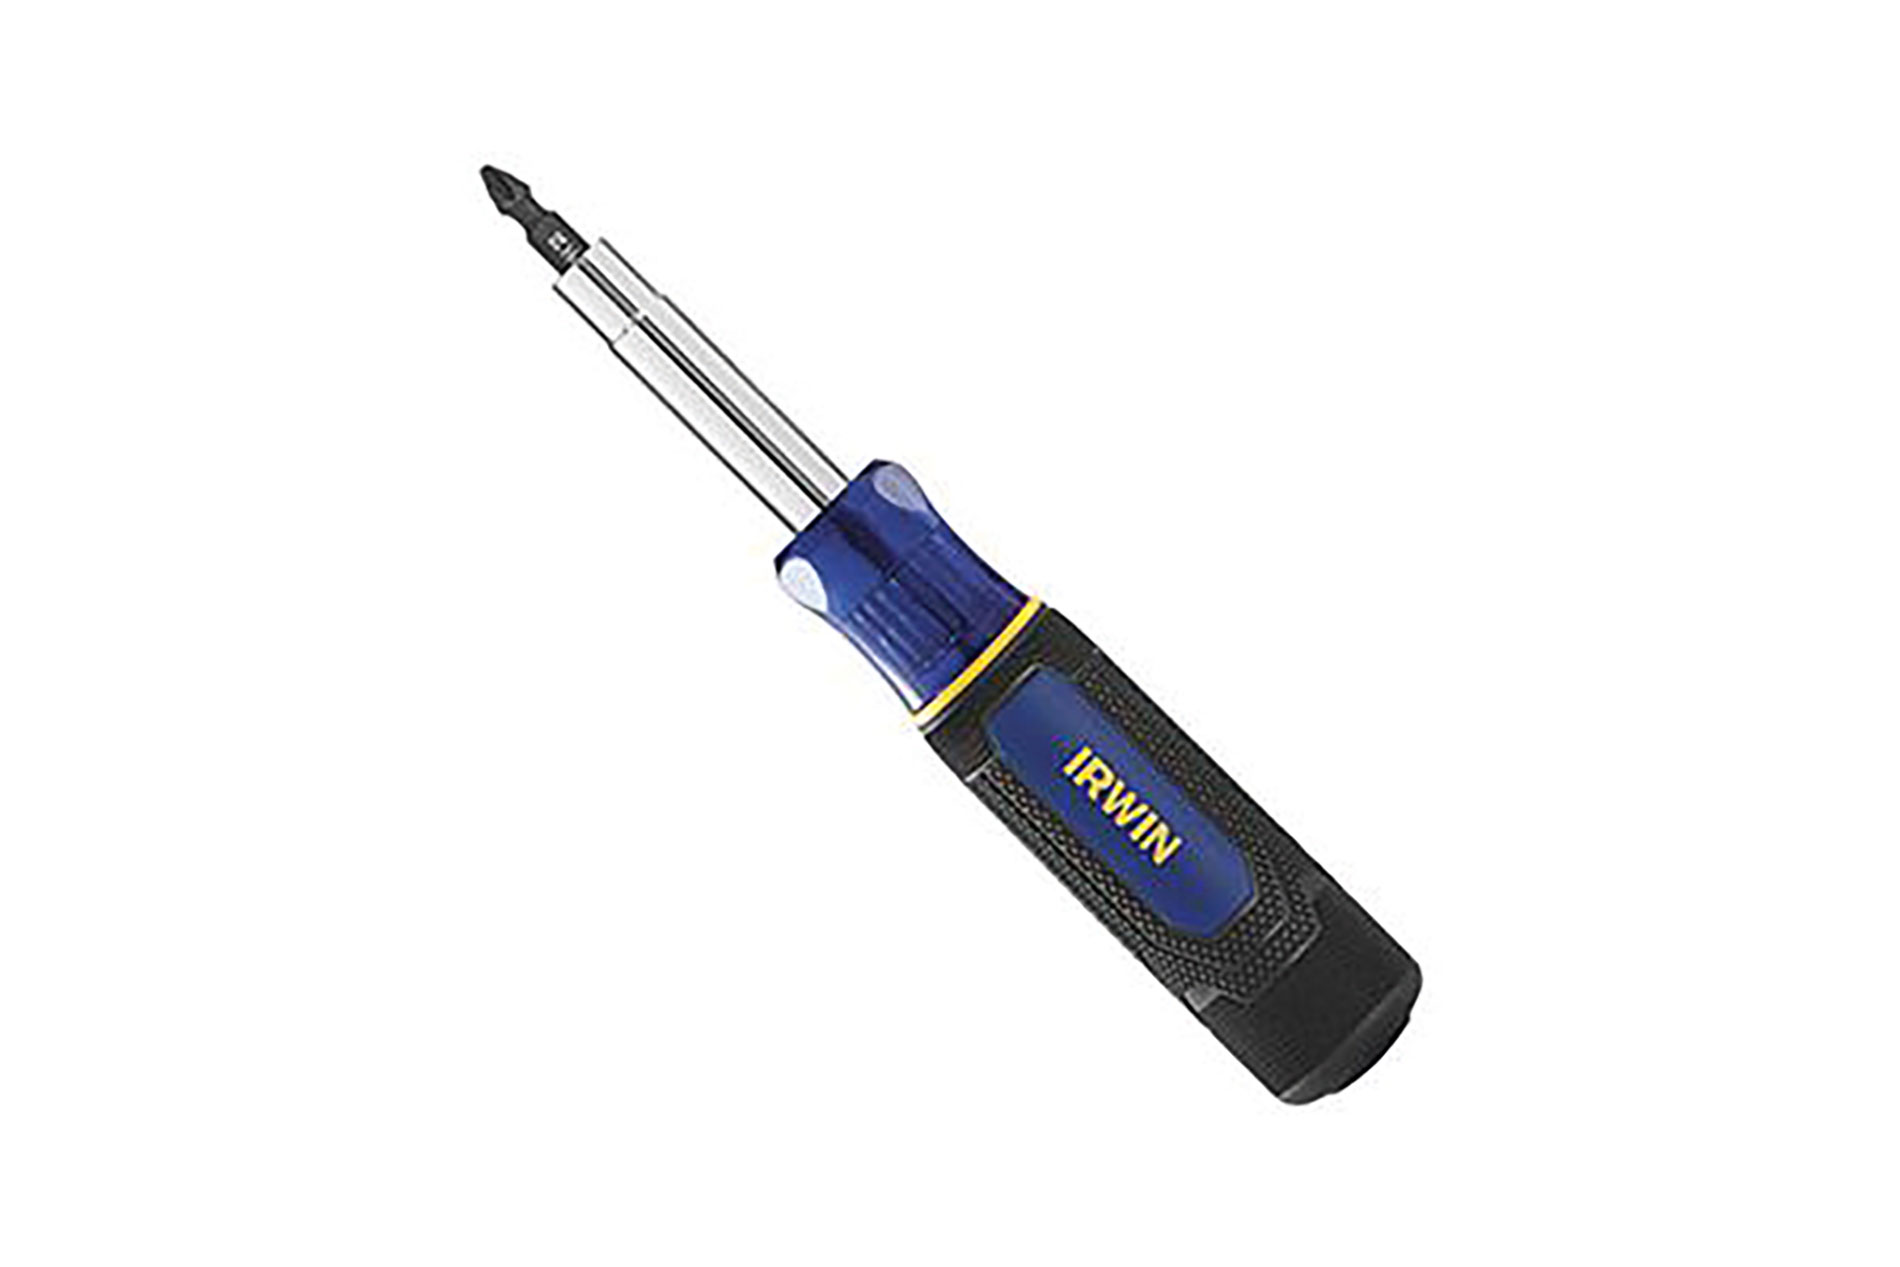 Irwin Tools’ 1948773 8-in-1 screwdriver